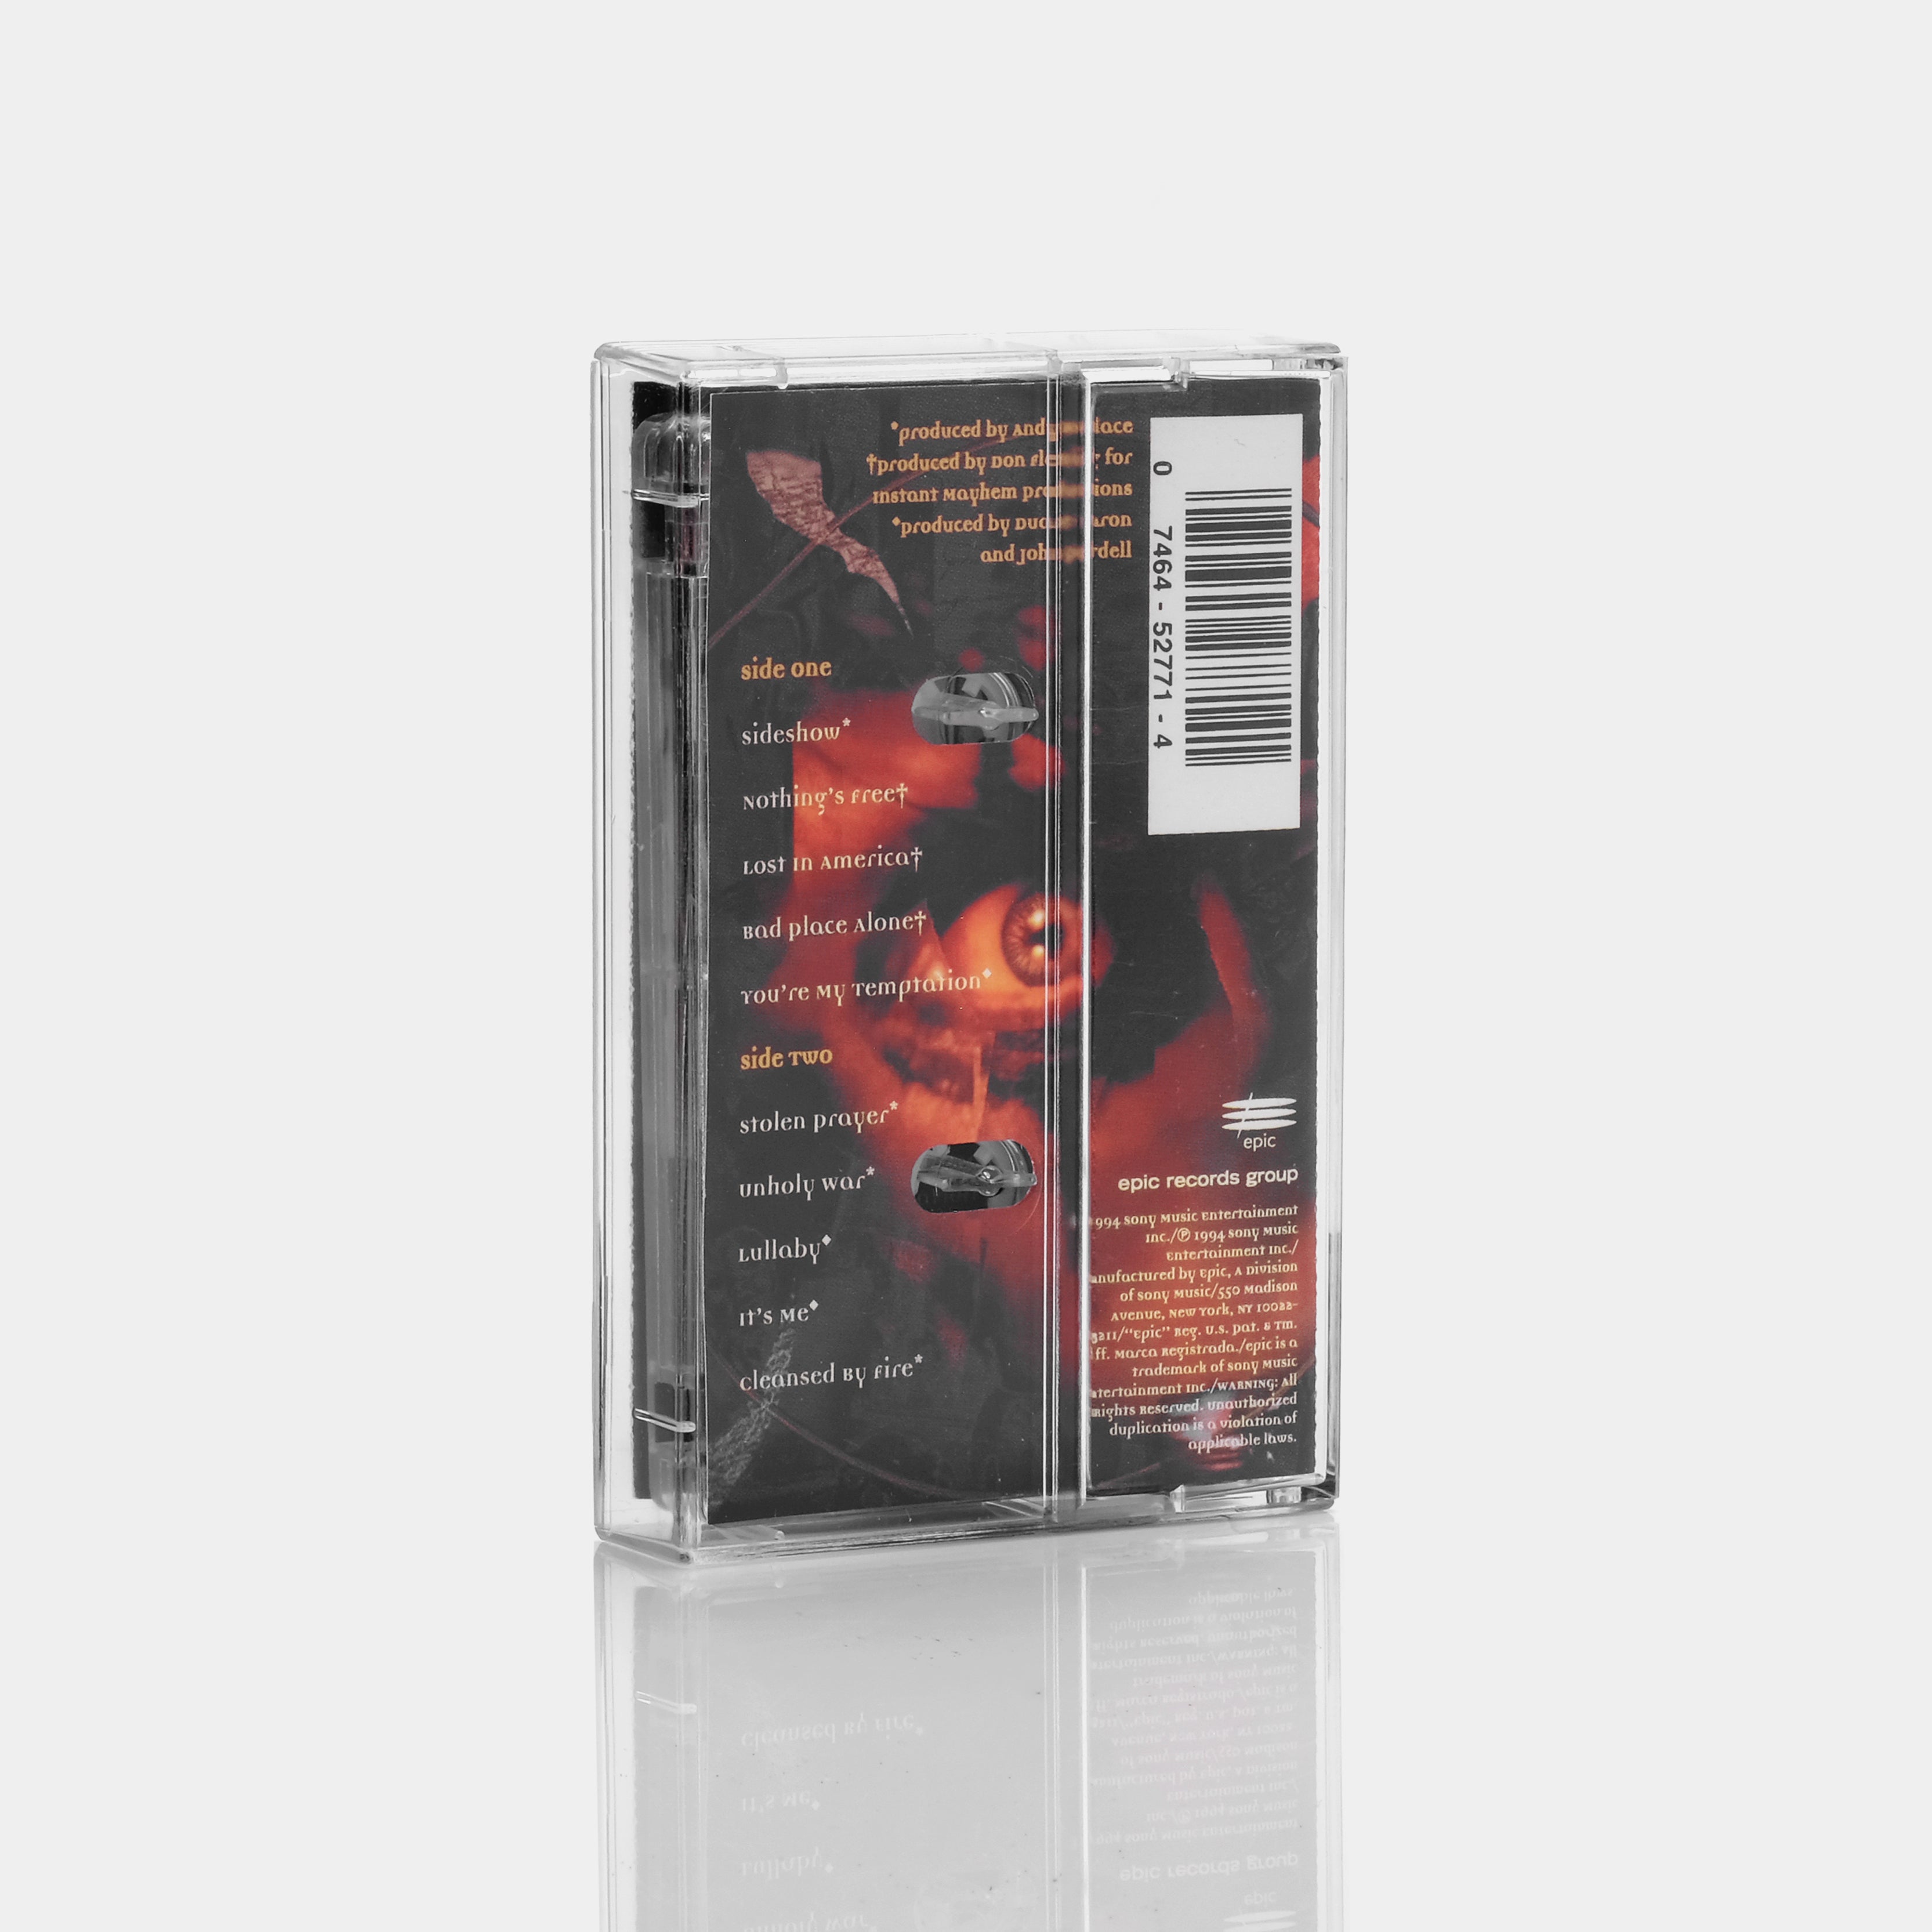 Alice Cooper - The Last Temptation Cassette Tape